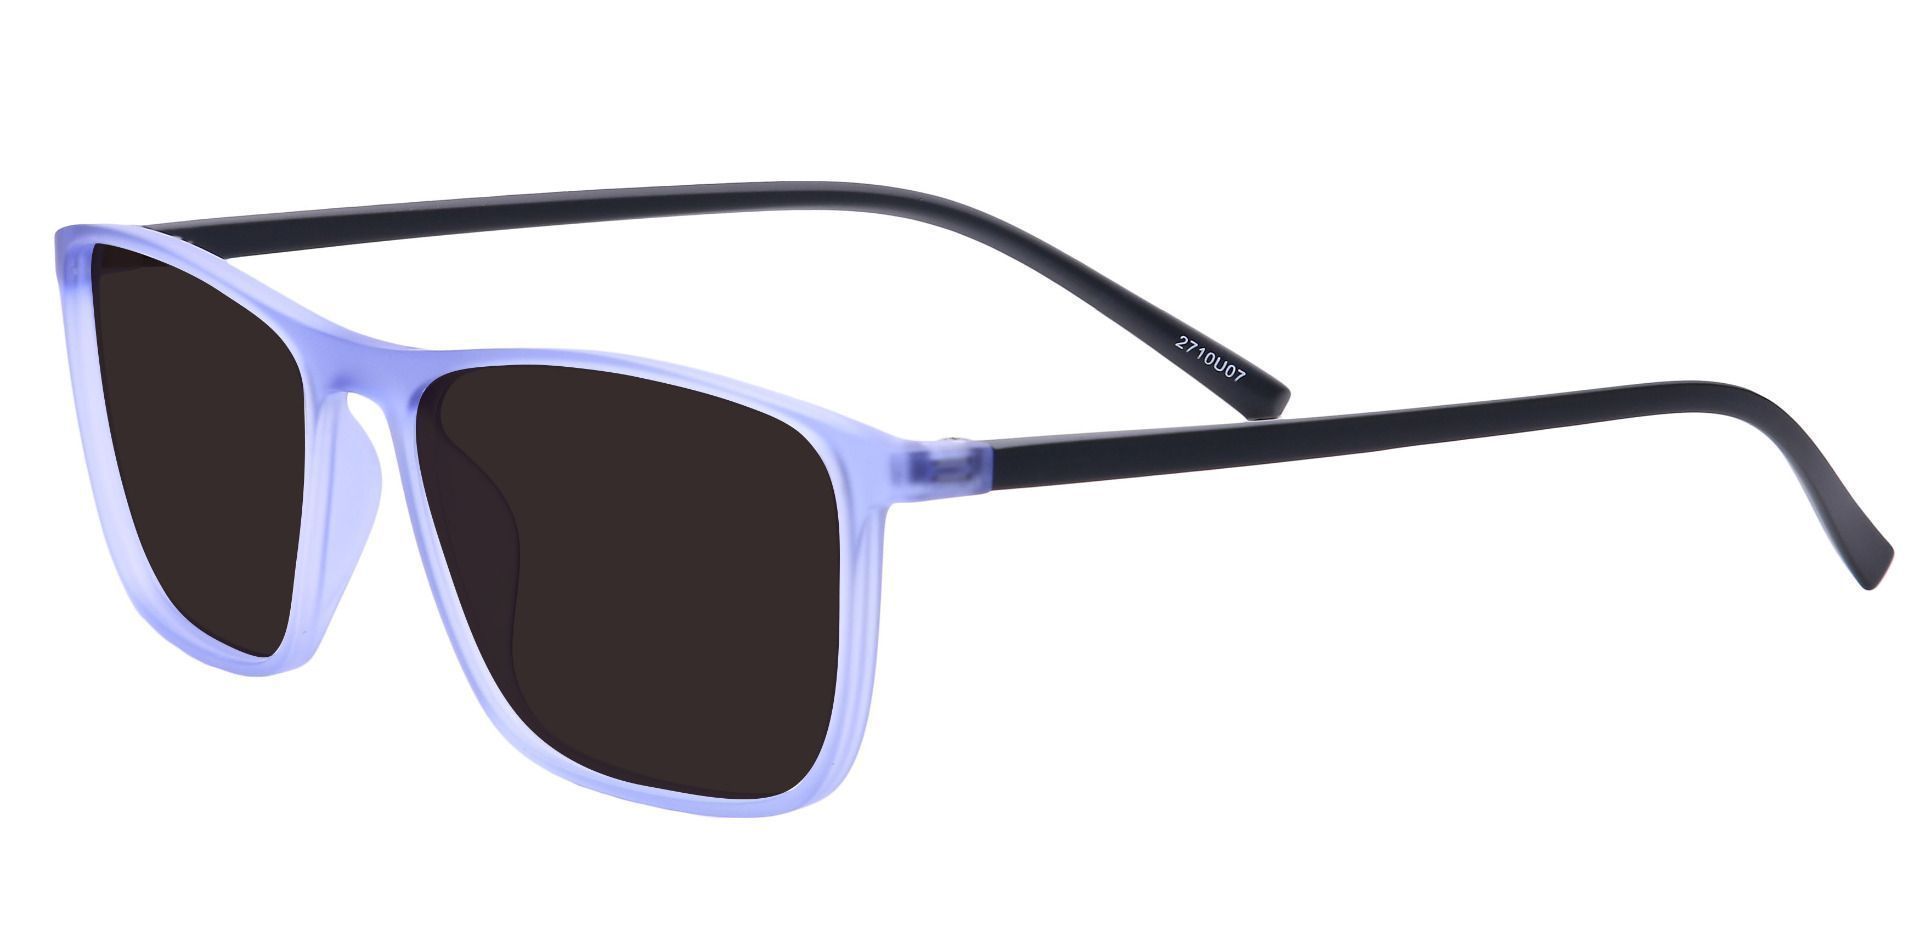 Candid Rectangle Progressive Sunglasses - Blue Frame With Gray Lenses